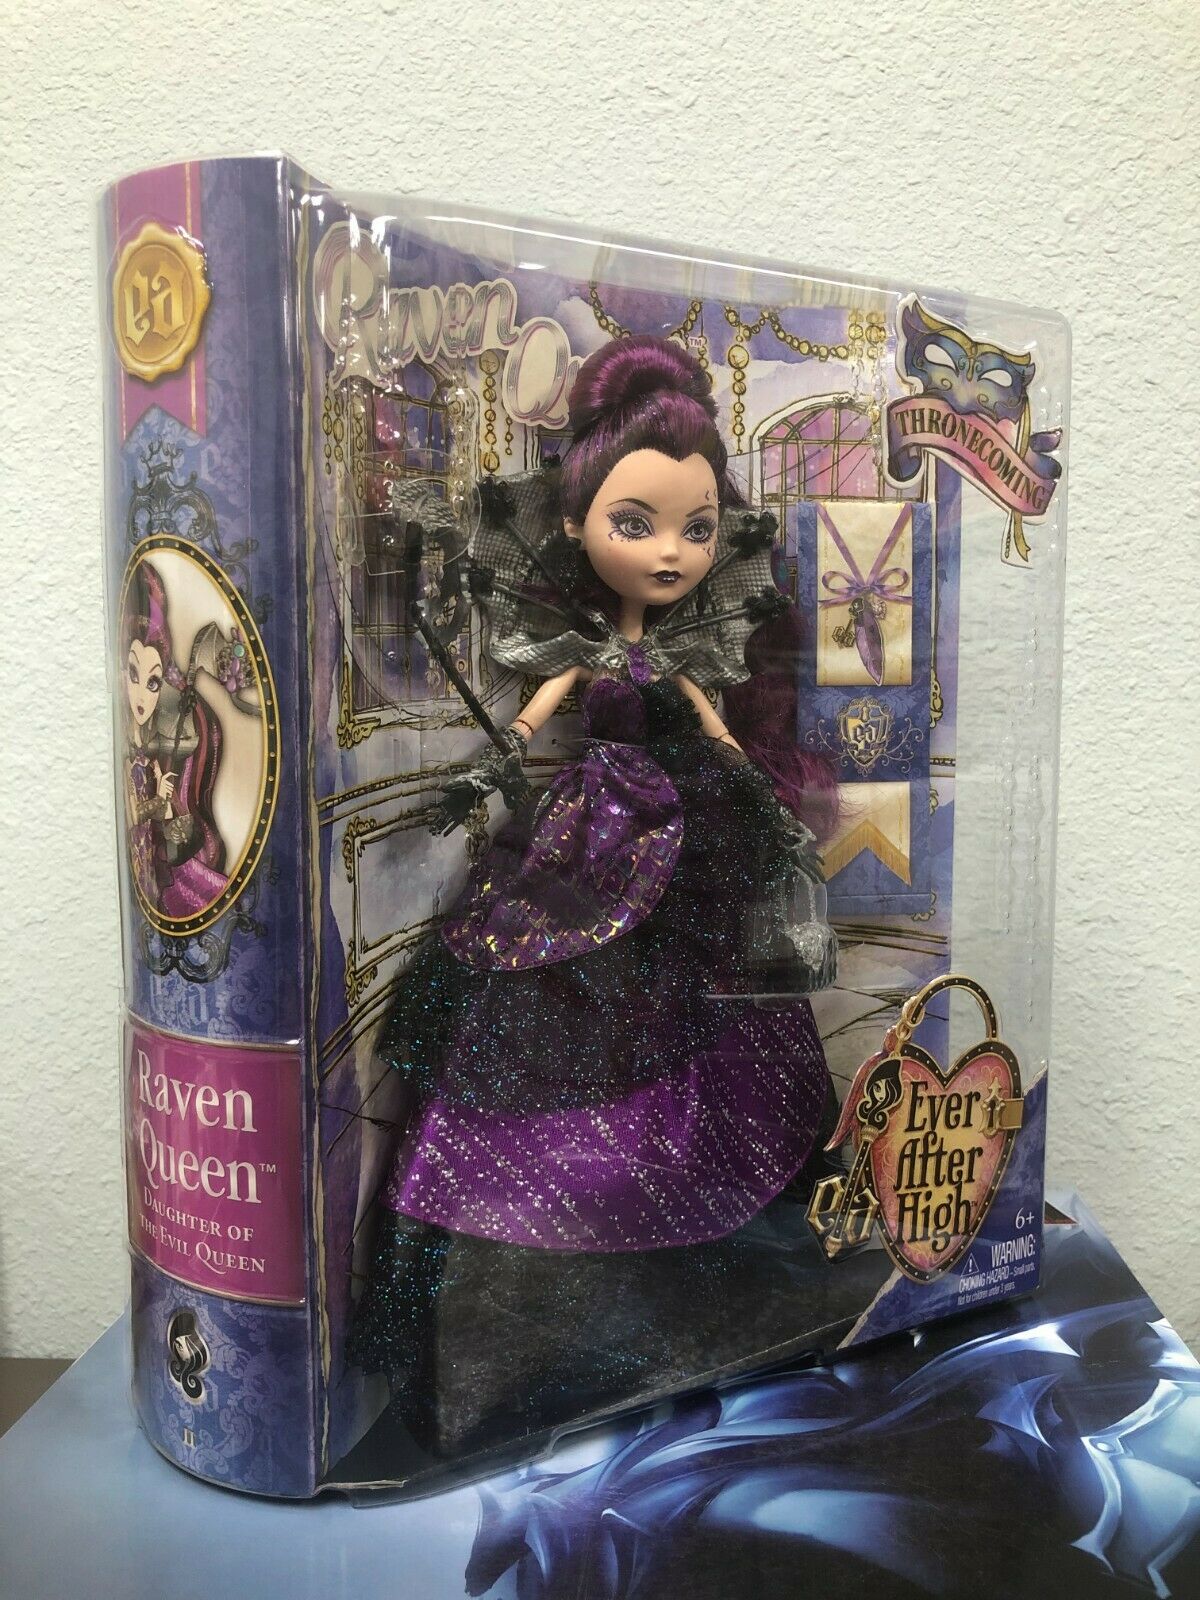 Ever After High Boneca Primeiro Capítulo Raven Queen - Mattel em